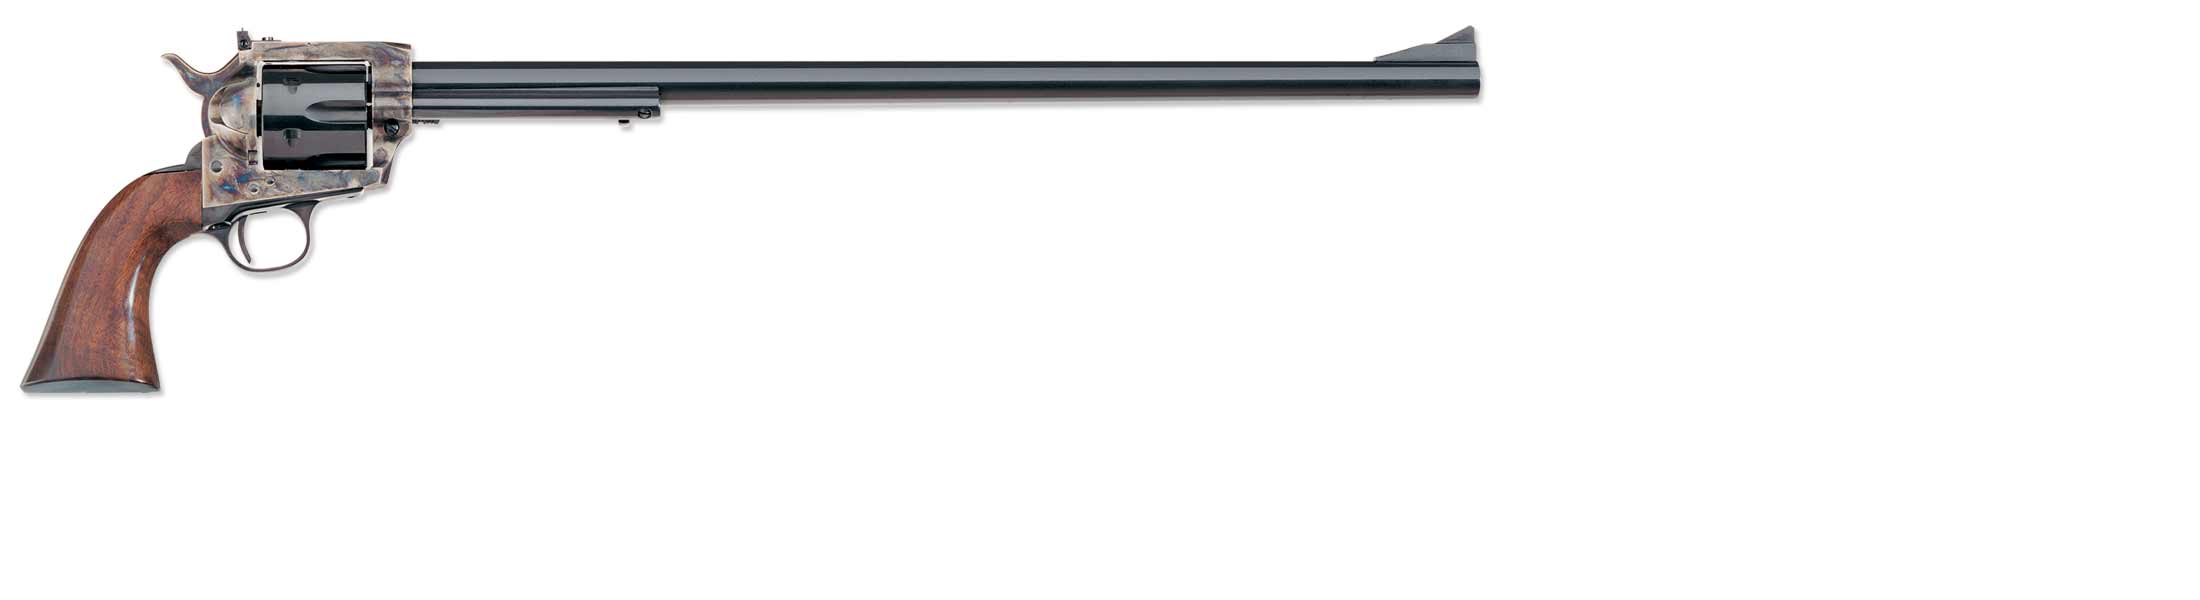 Uberti 1873 Cattleman Buntline NM Steel Revolver U344060, 357 Magnum, 18", One Piece Walnut Stock, Blued Finish